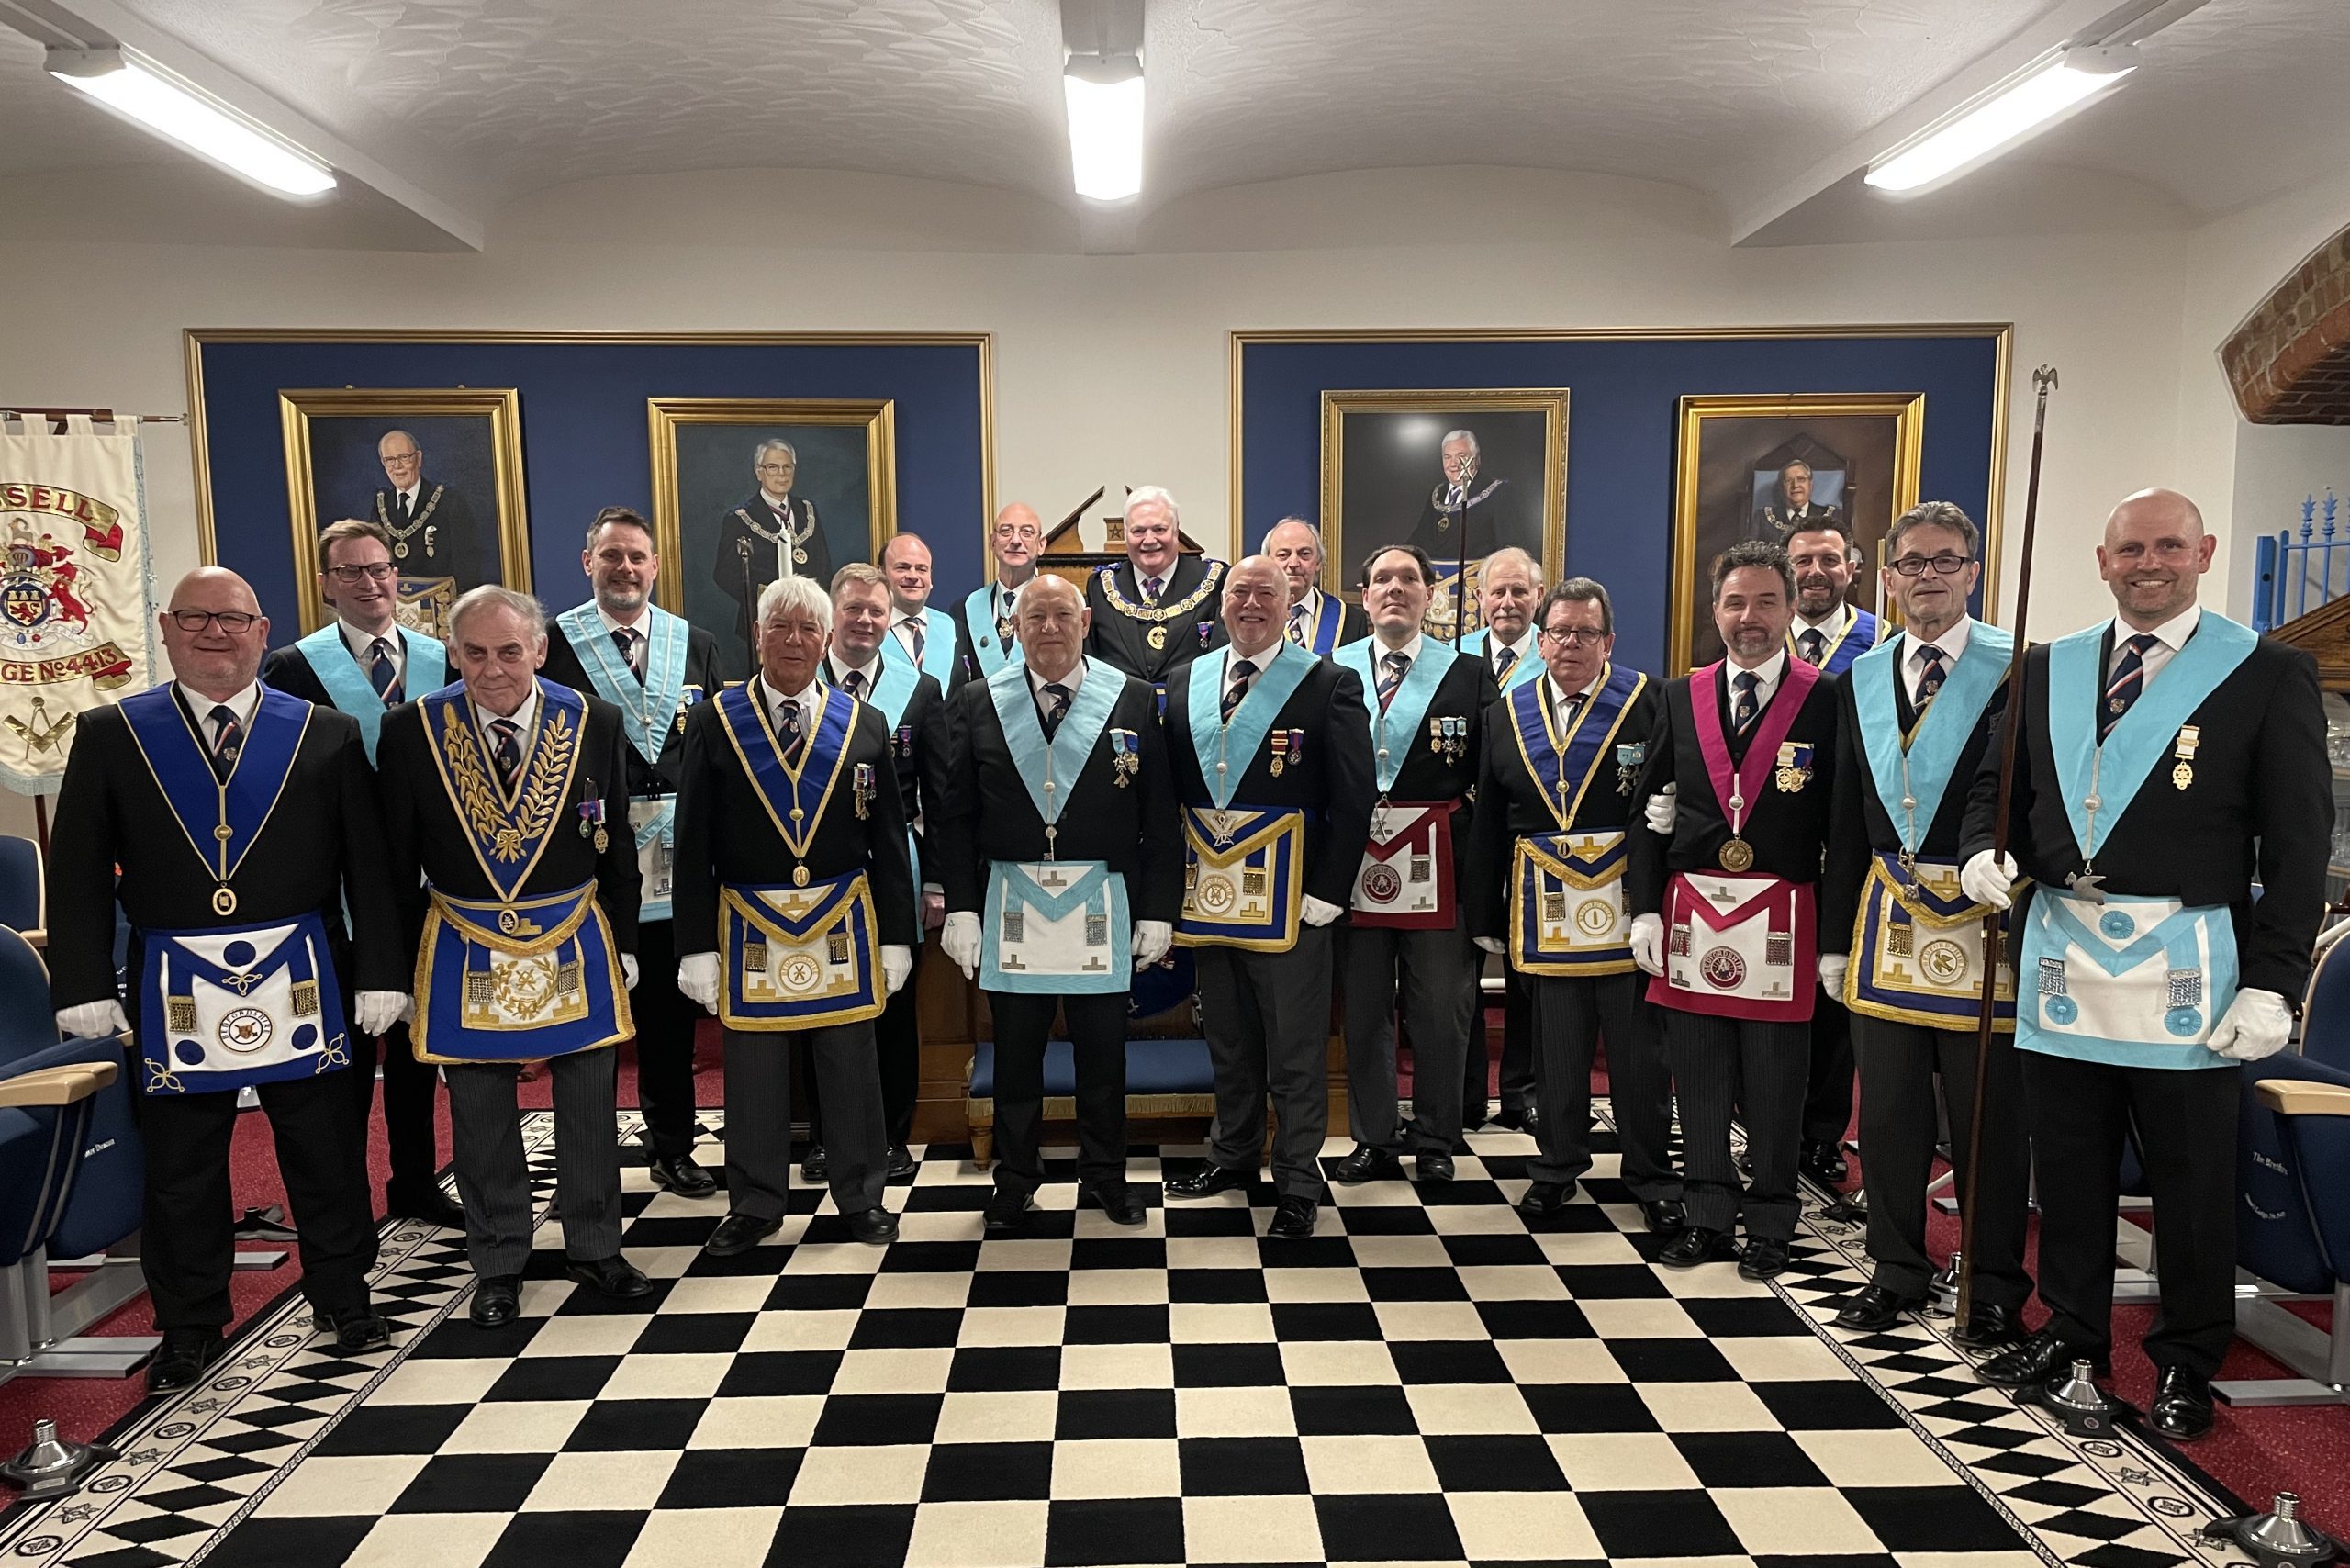 Russell Lodge Celebrates Centenary